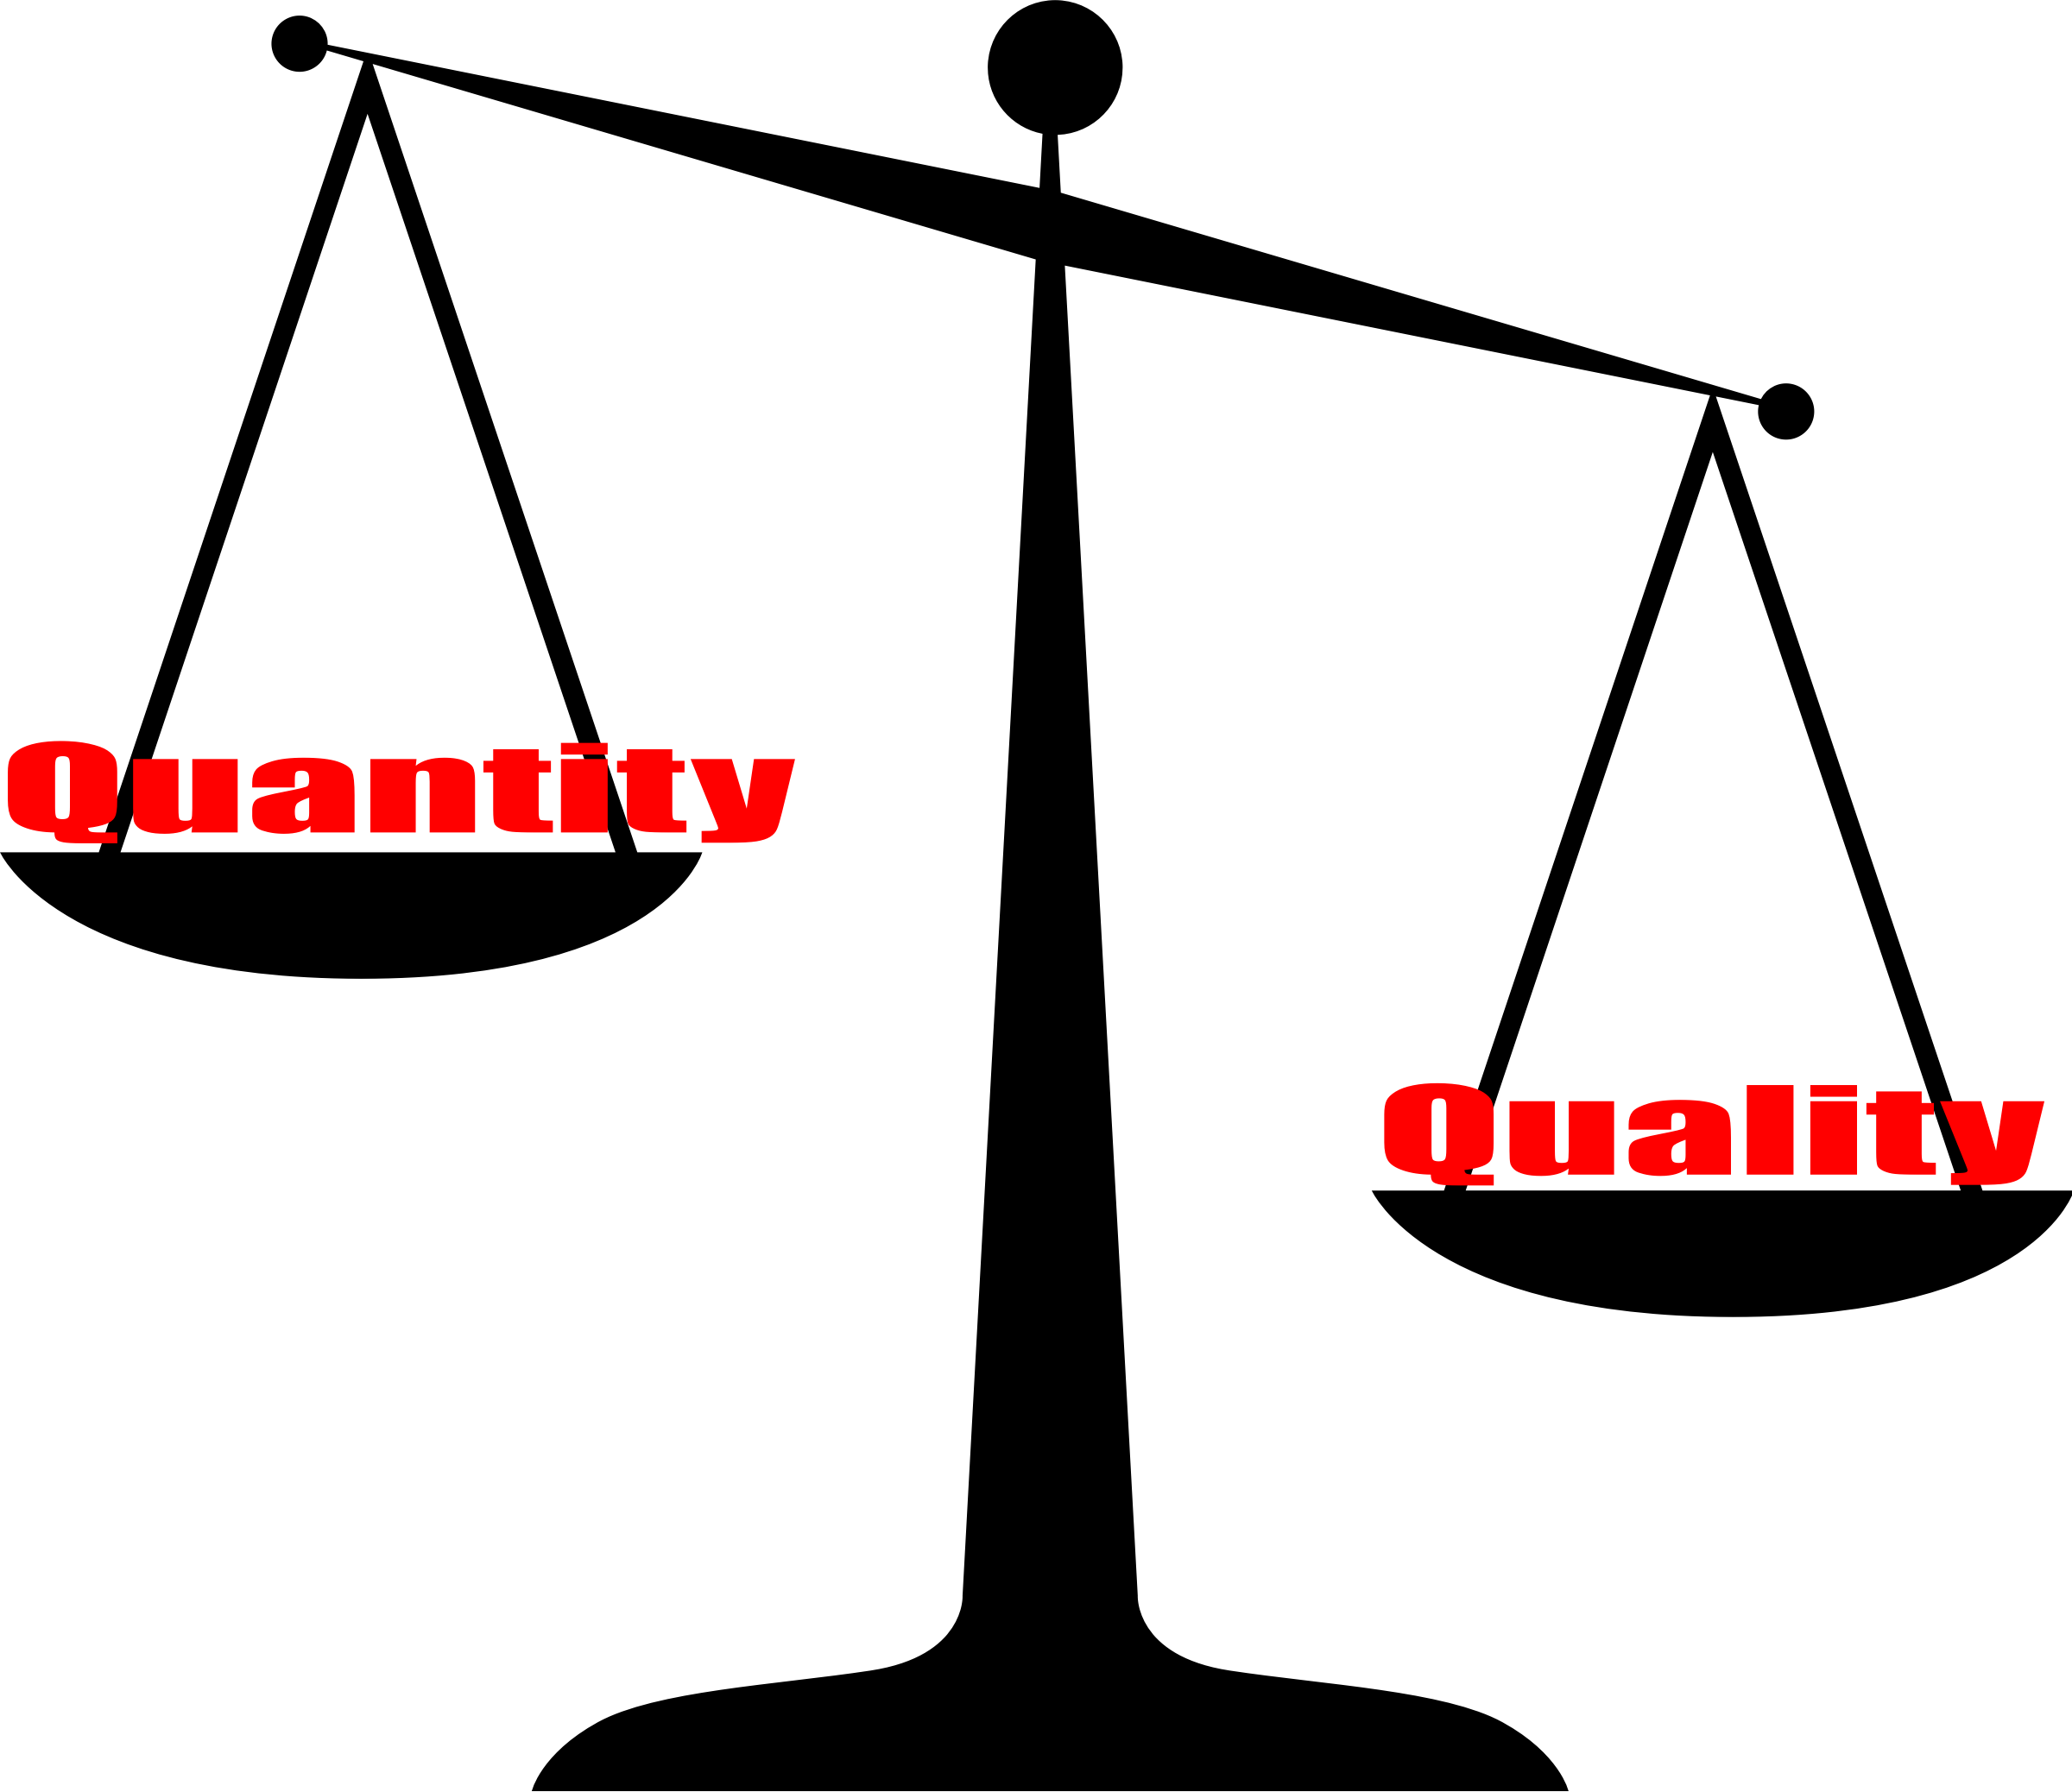 Download Quality vs Quantity Vector Clipart image - Free stock photo - Public Domain photo - CC0 Images